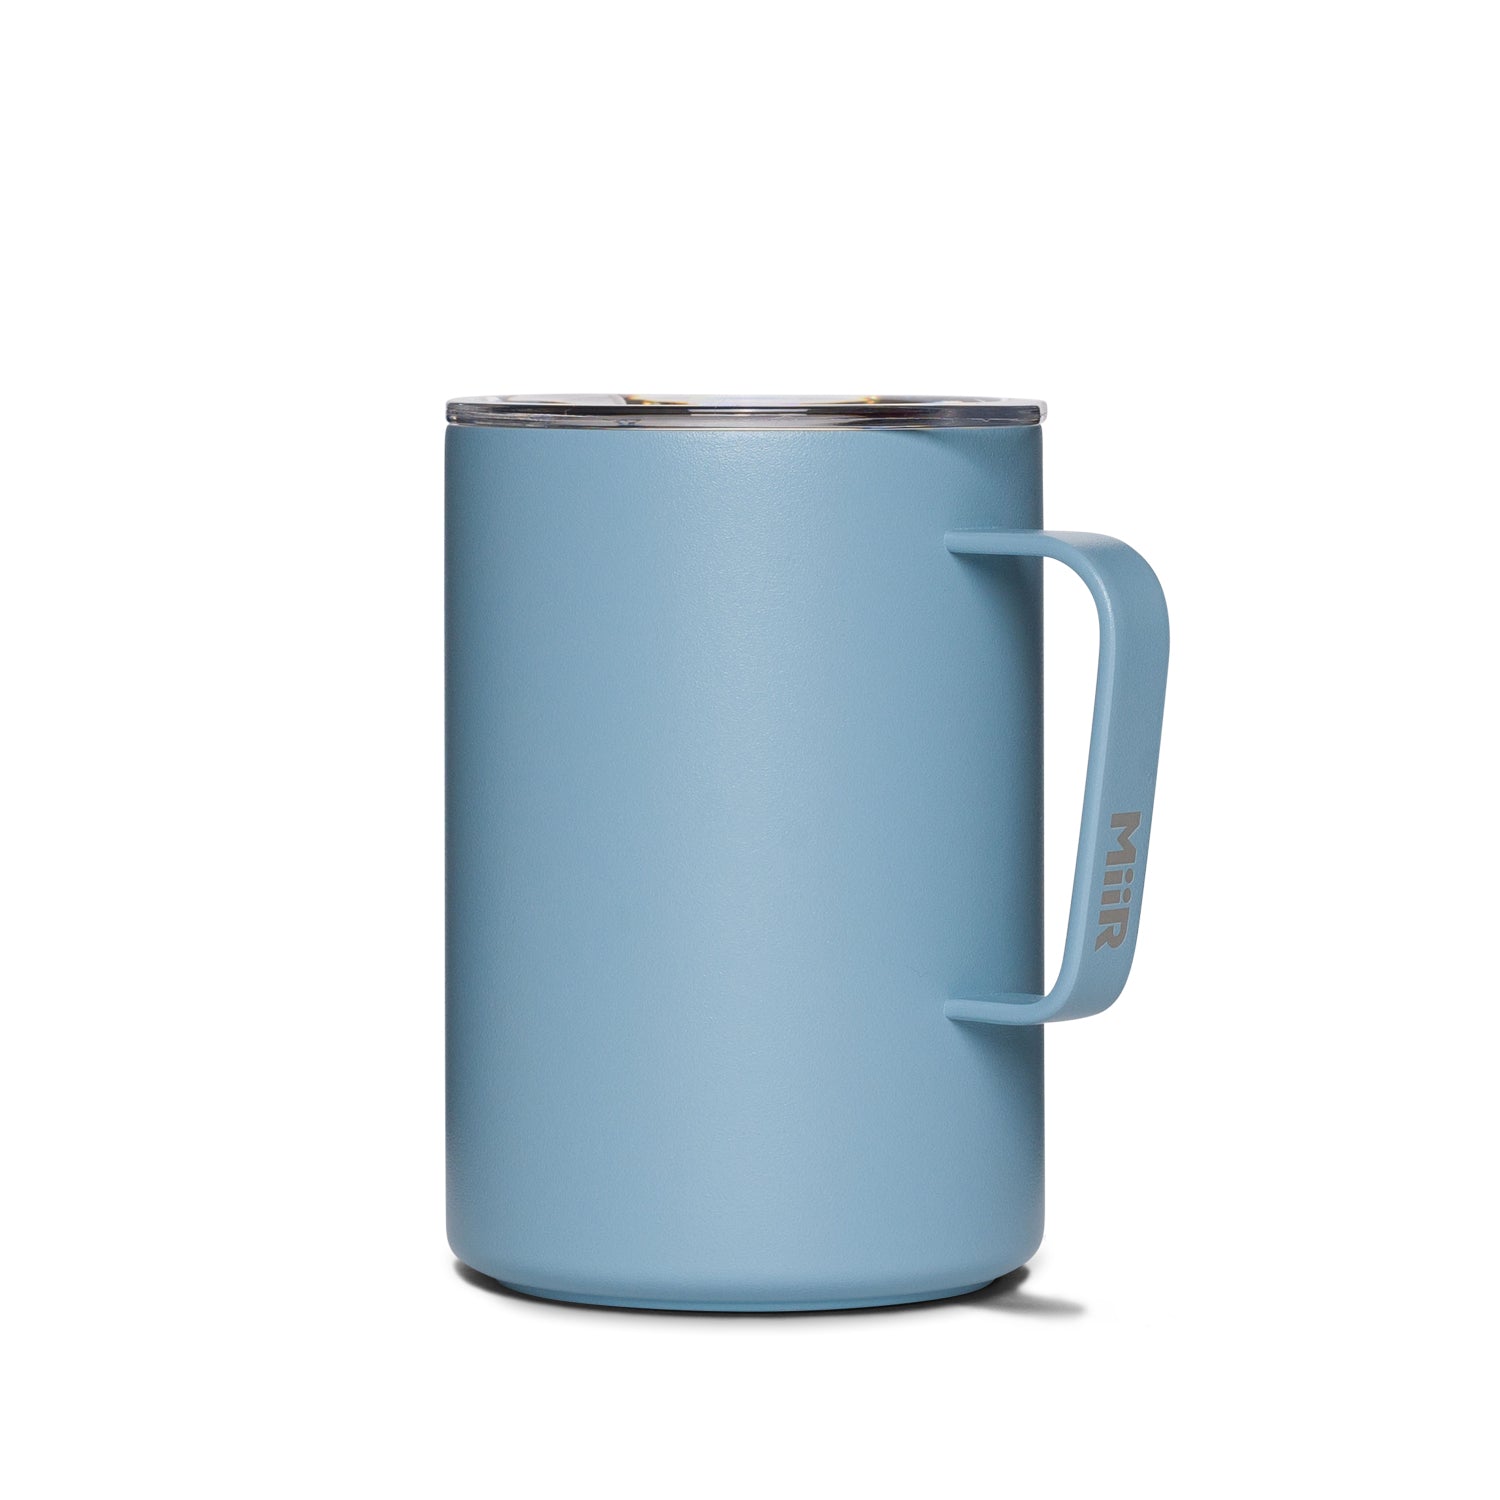 Insulated Camp Mug by MiiR - 8 oz. - Black Coffee Roasting Company